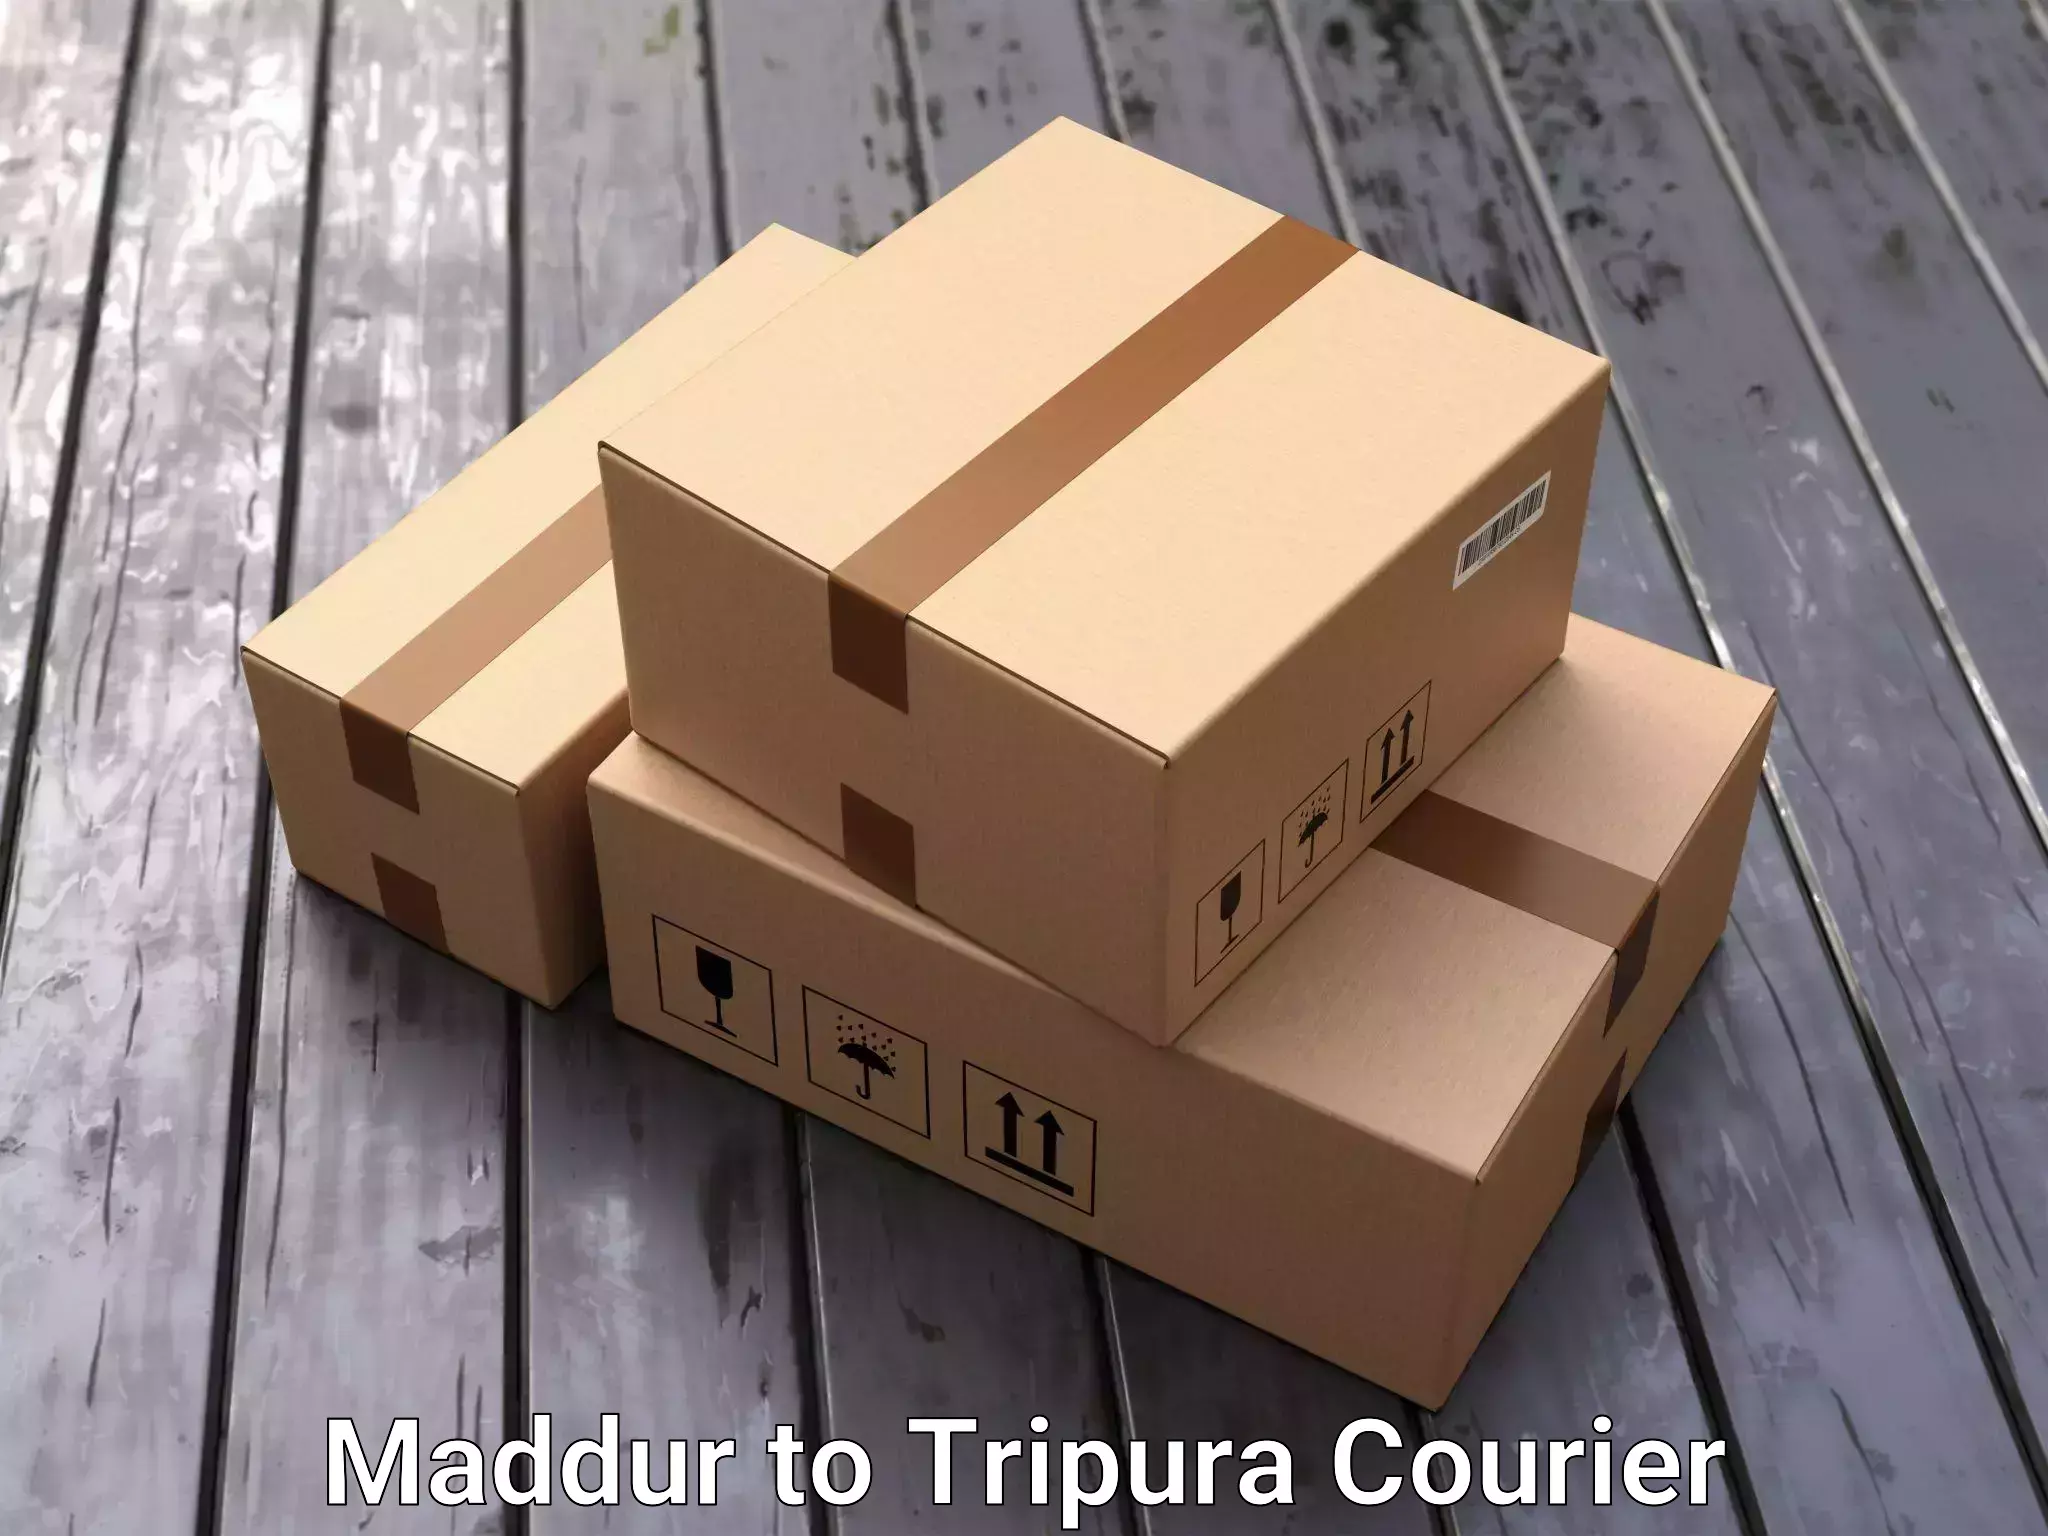 Professional moving assistance Maddur to Udaipur Tripura